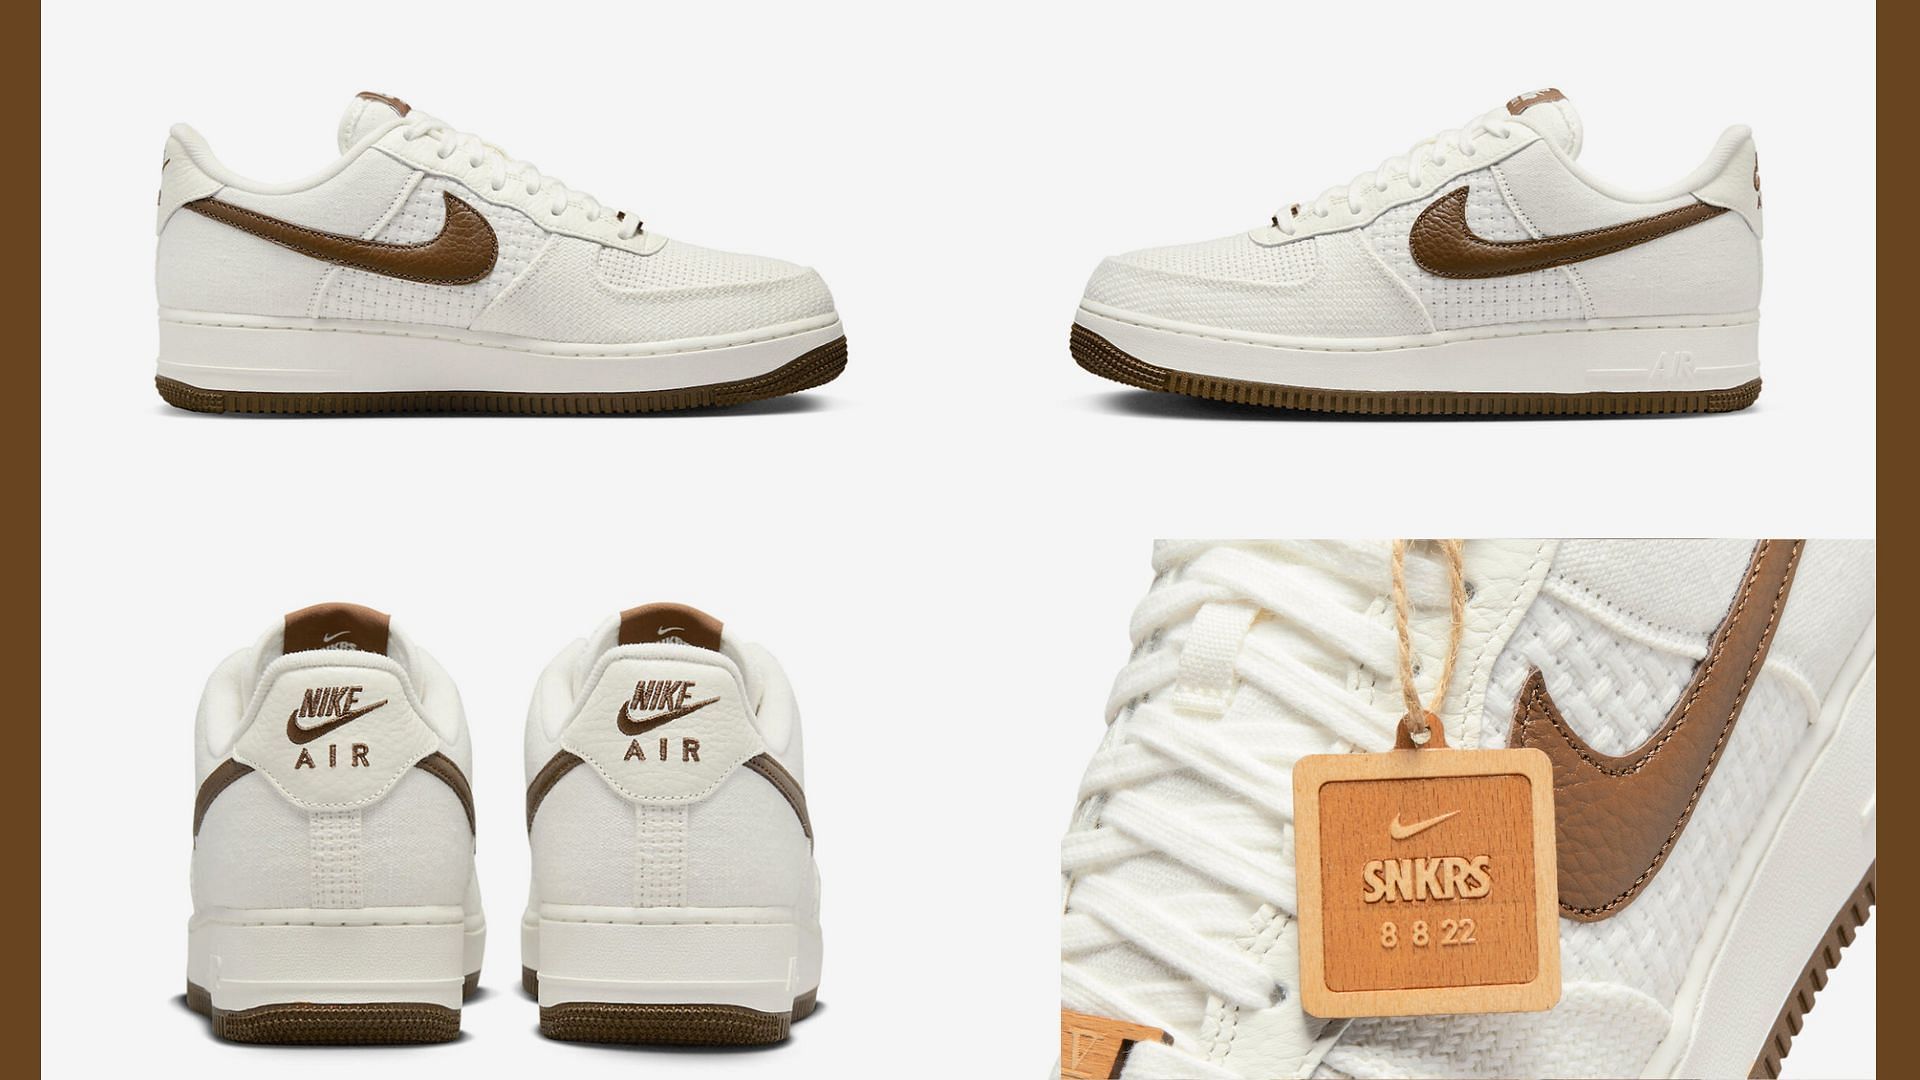 Upcoming Nike Air Force 1 Low SNKRS anniversary edition sneakers (Image via Sportskeeda)